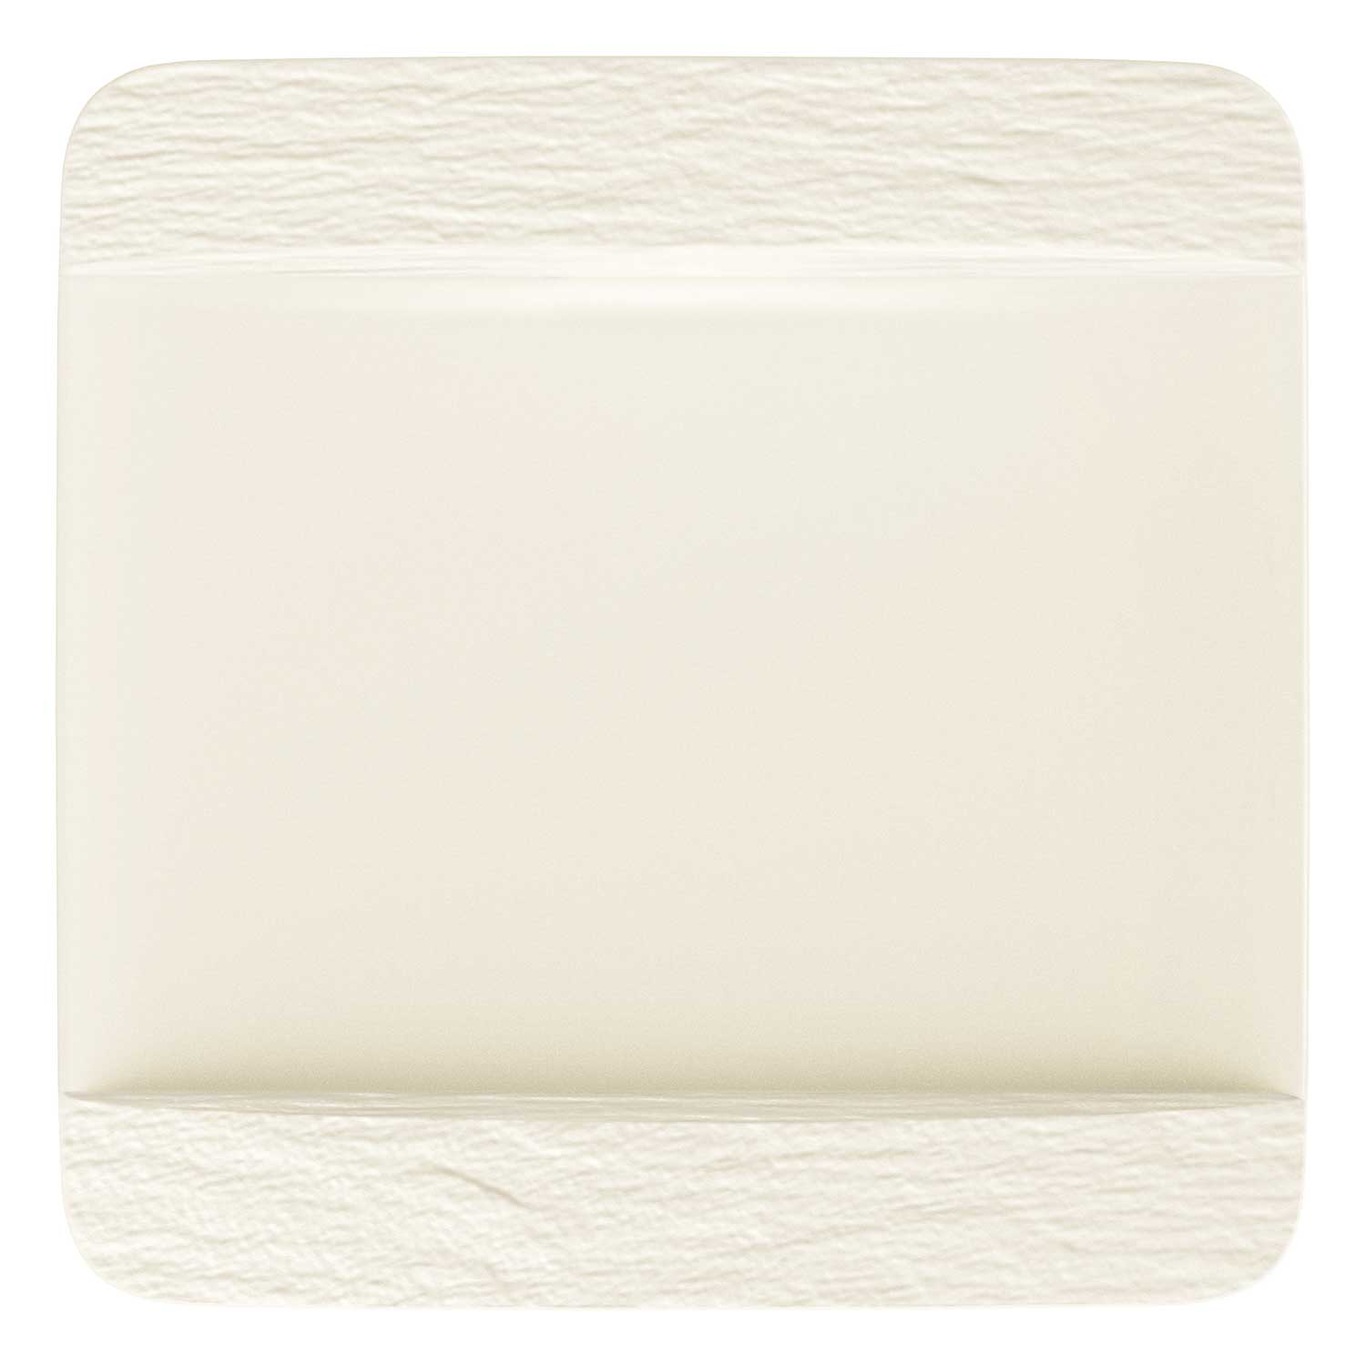 Manufacture Rock Squared Plate, White 28 cm